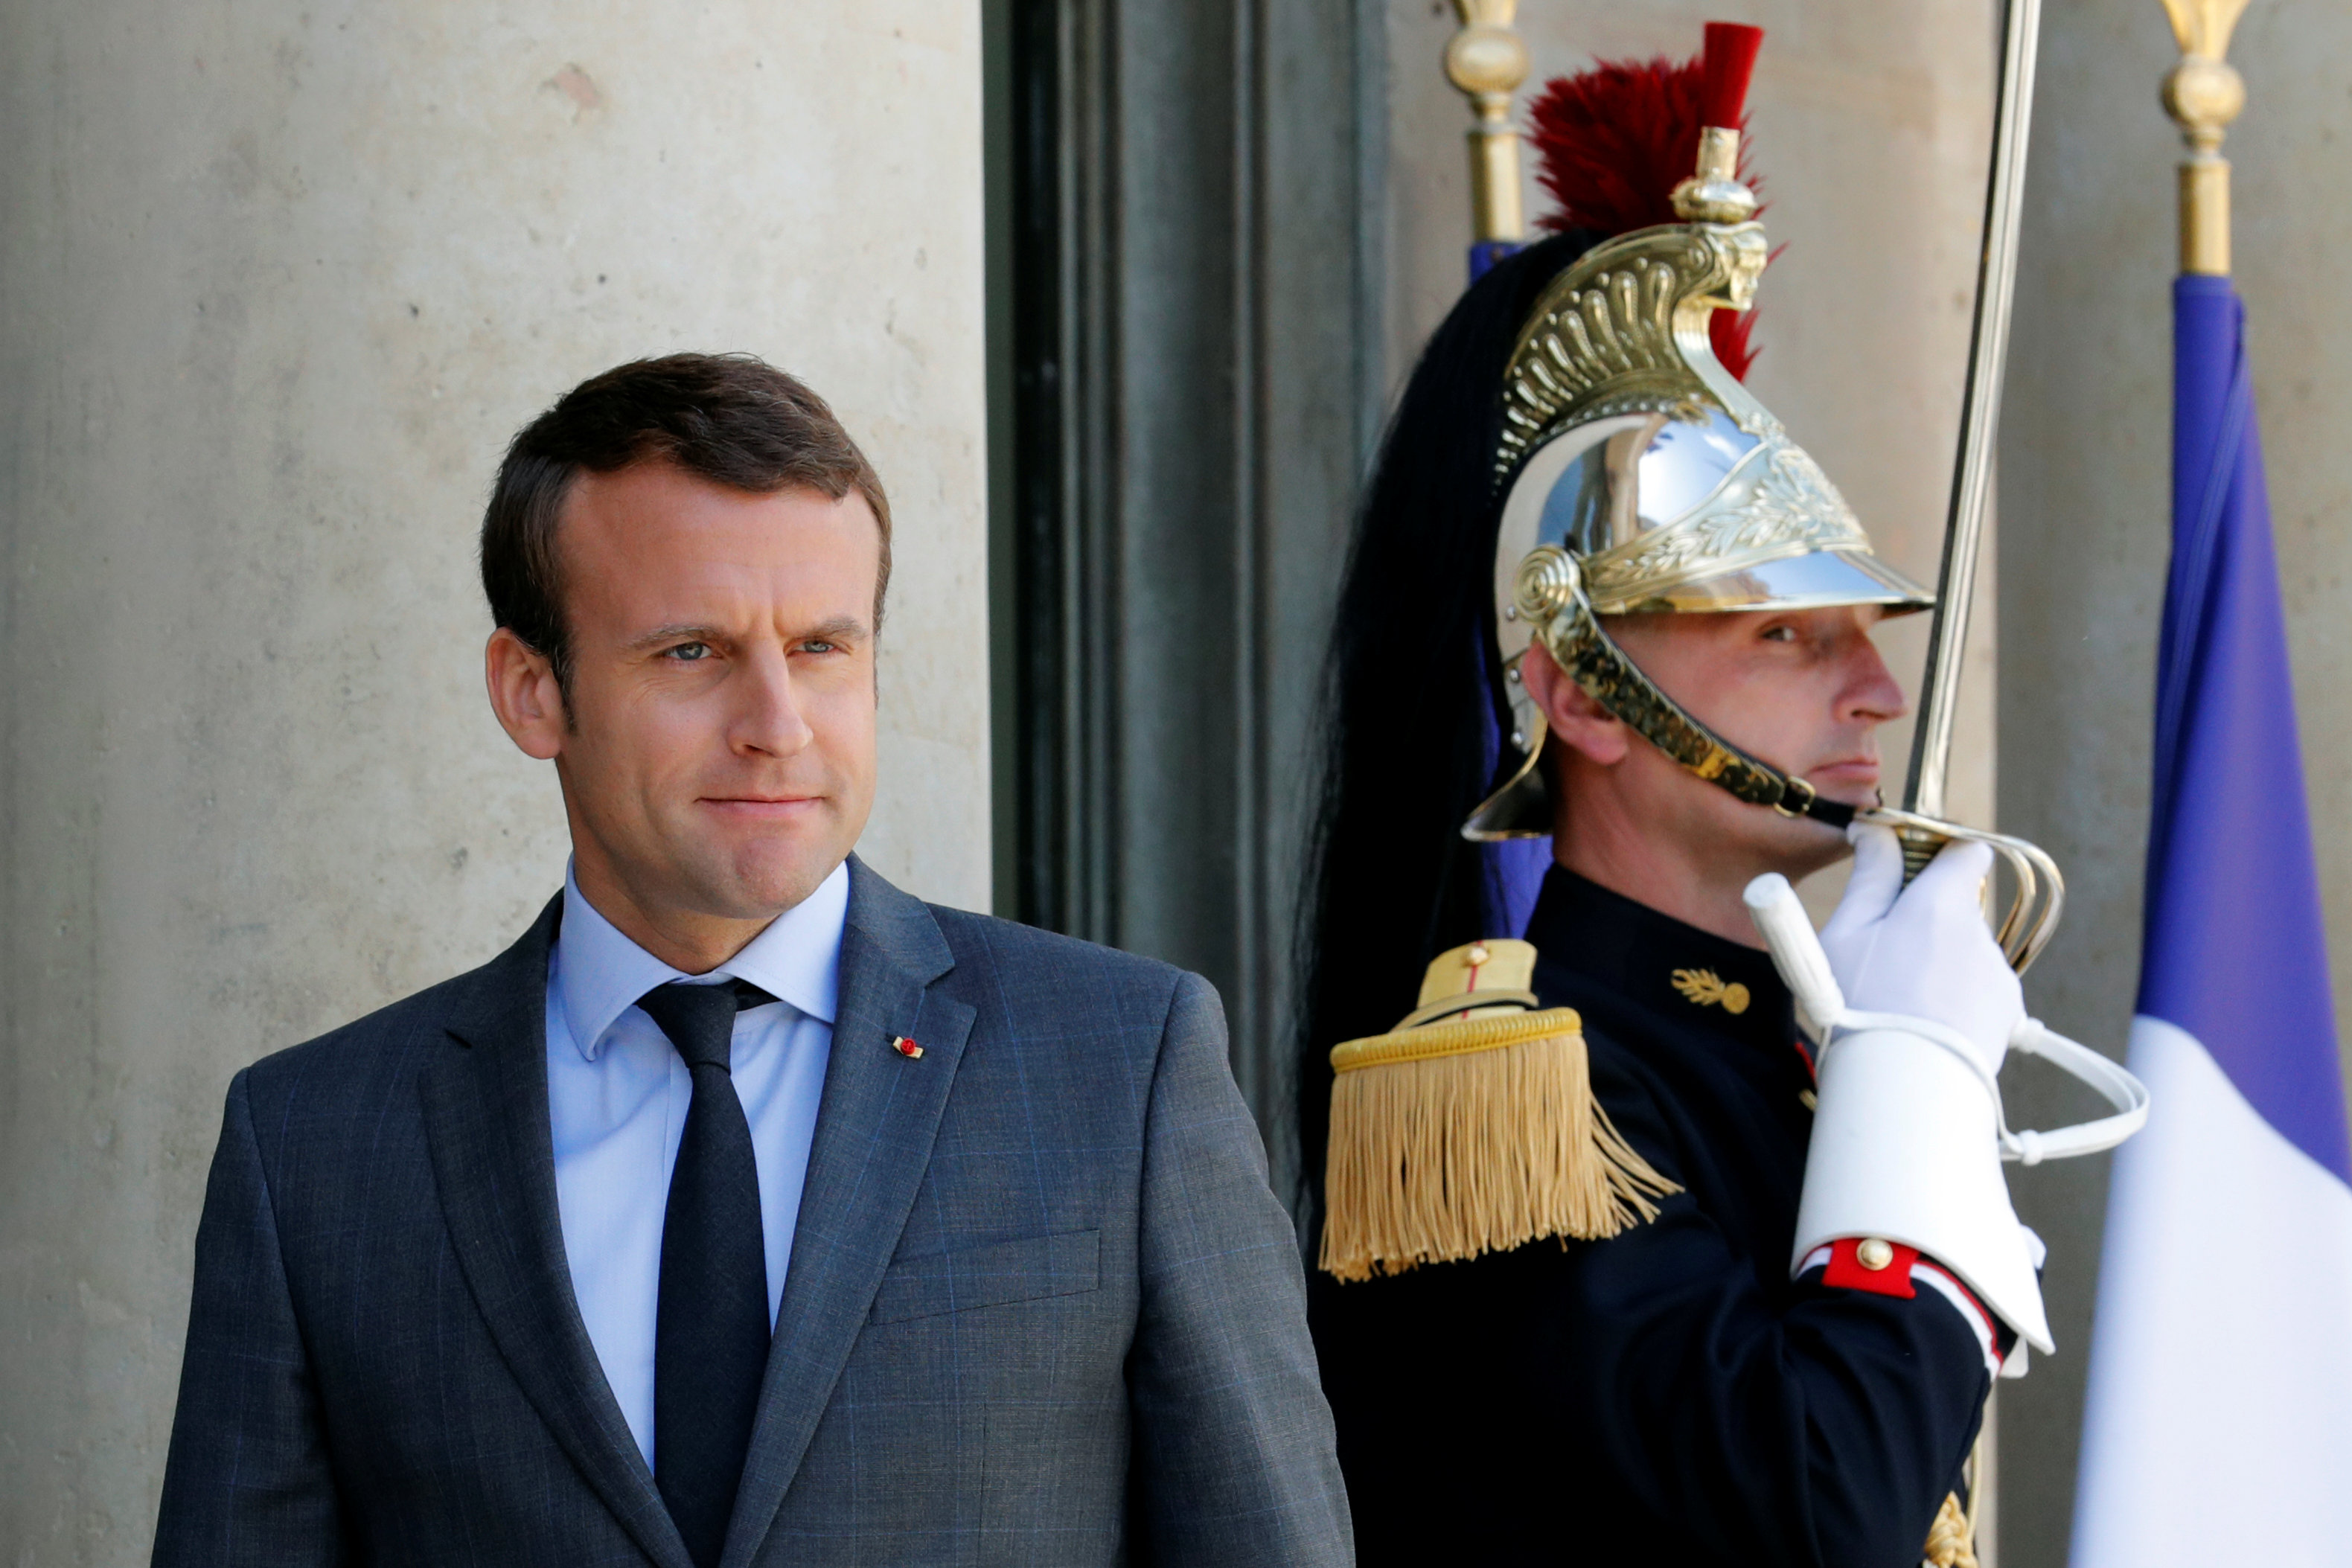 France's Macron set for biggest majority since De Gaulle - poll